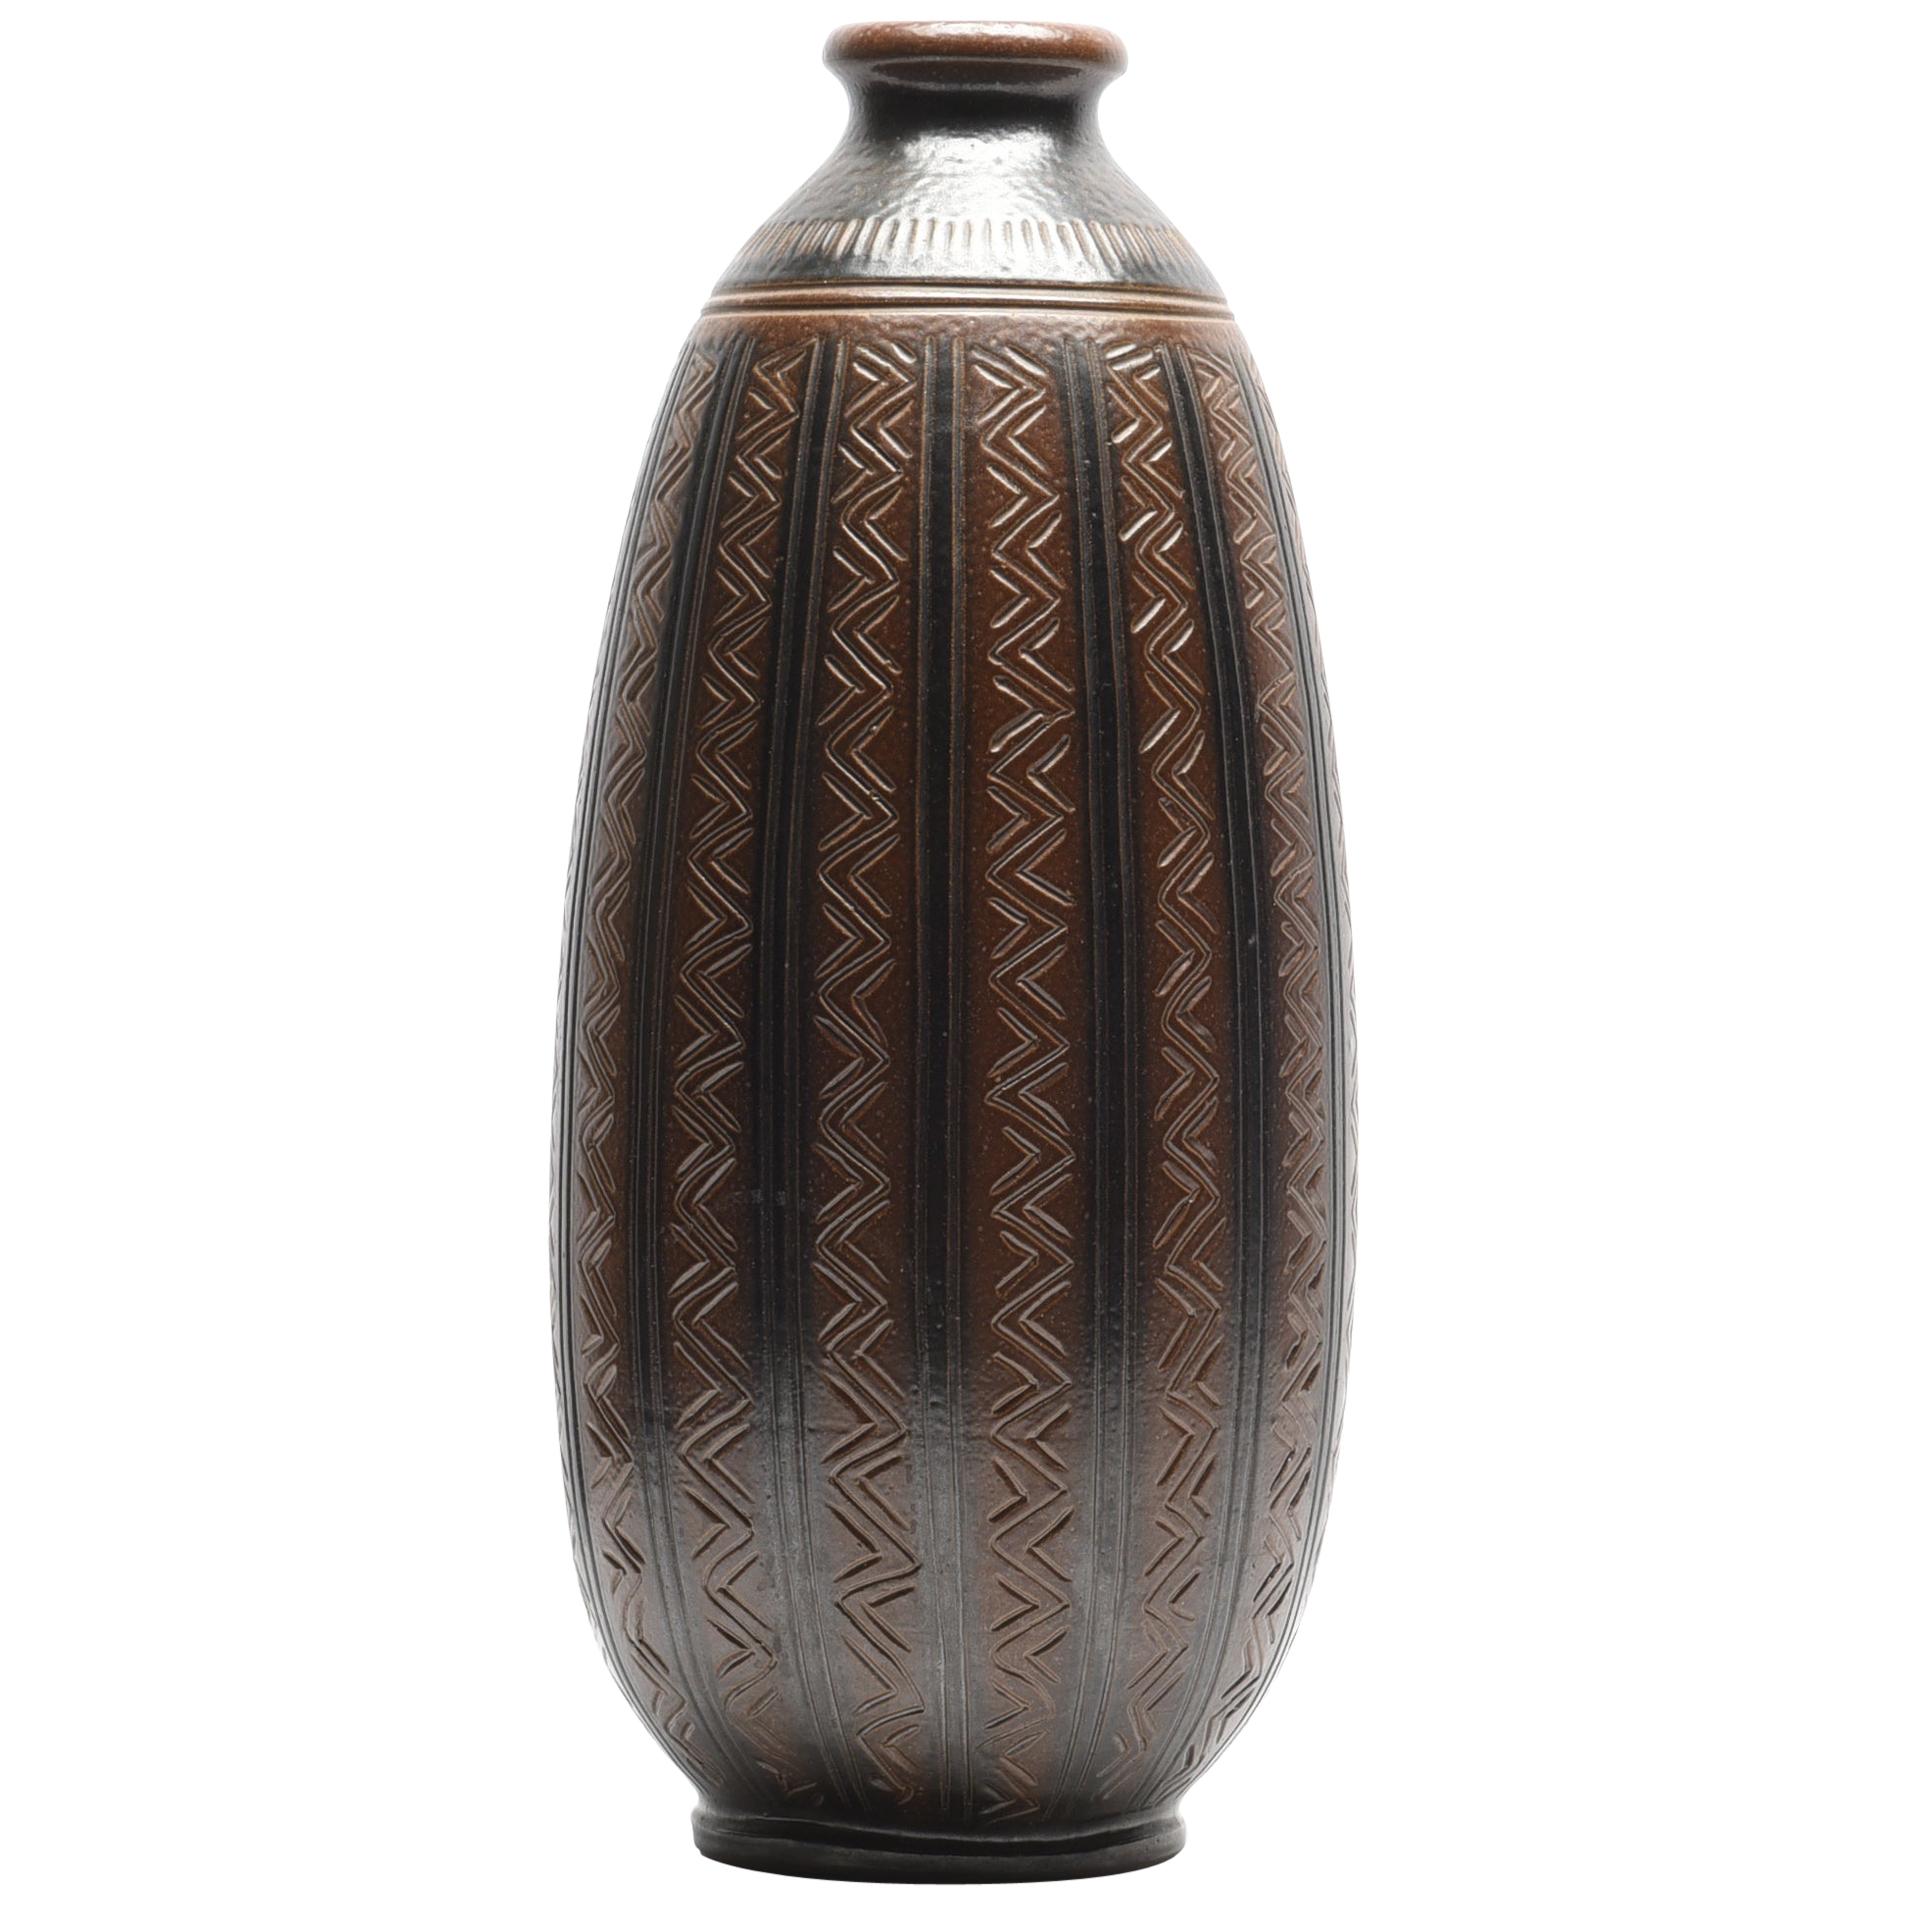 Arthur Andersson Mid Century Floor Vase Produced by Wallåkra, Sweden, 1950s